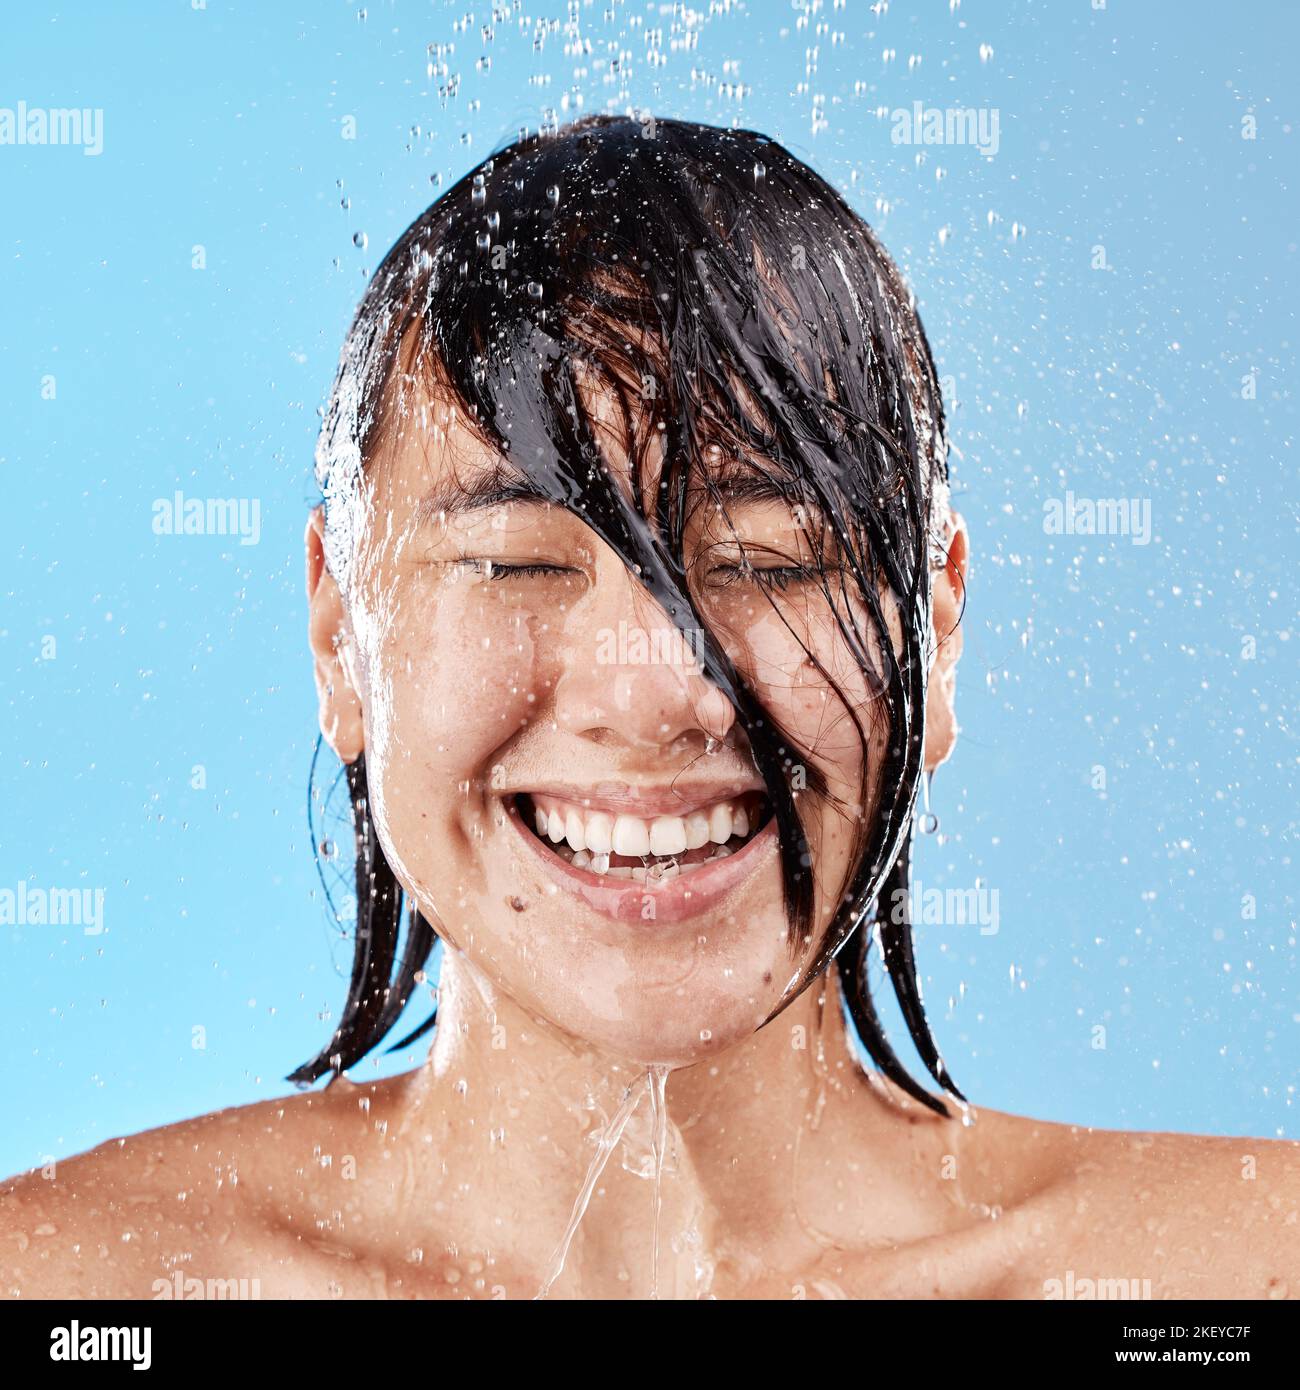 Woman Shower Washing Hair Shampoo Stock Photo by ©jayzynism 202171214